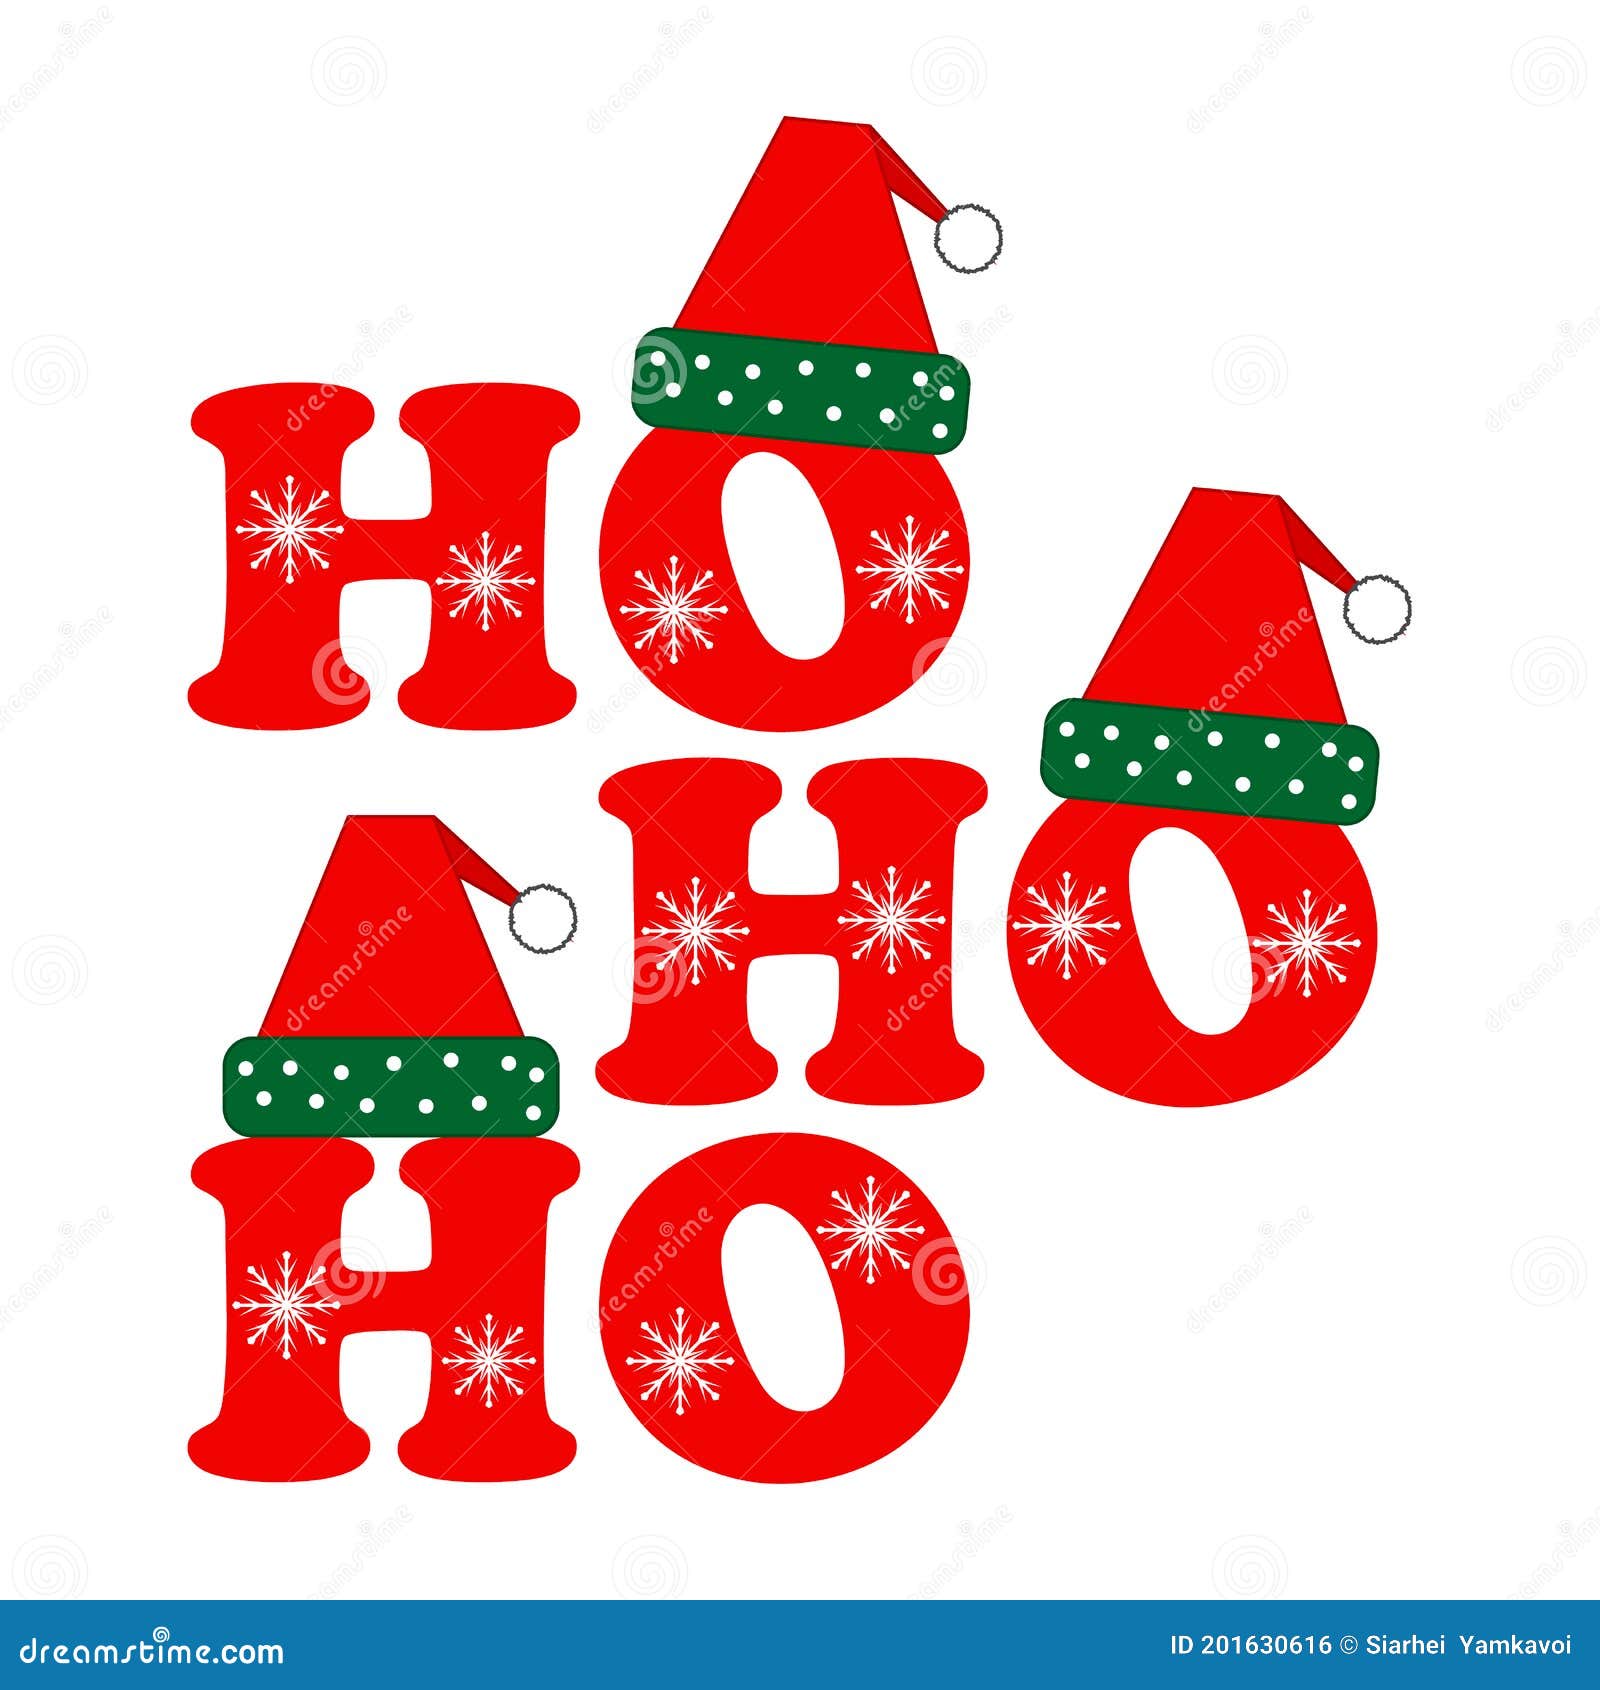 https://thumbs.dreamstime.com/z/santa-claus-phrase-ho-ho-ho-snowflakes-fur-hats-template-design-christmas-new-year-isolated-vector-201630616.jpg